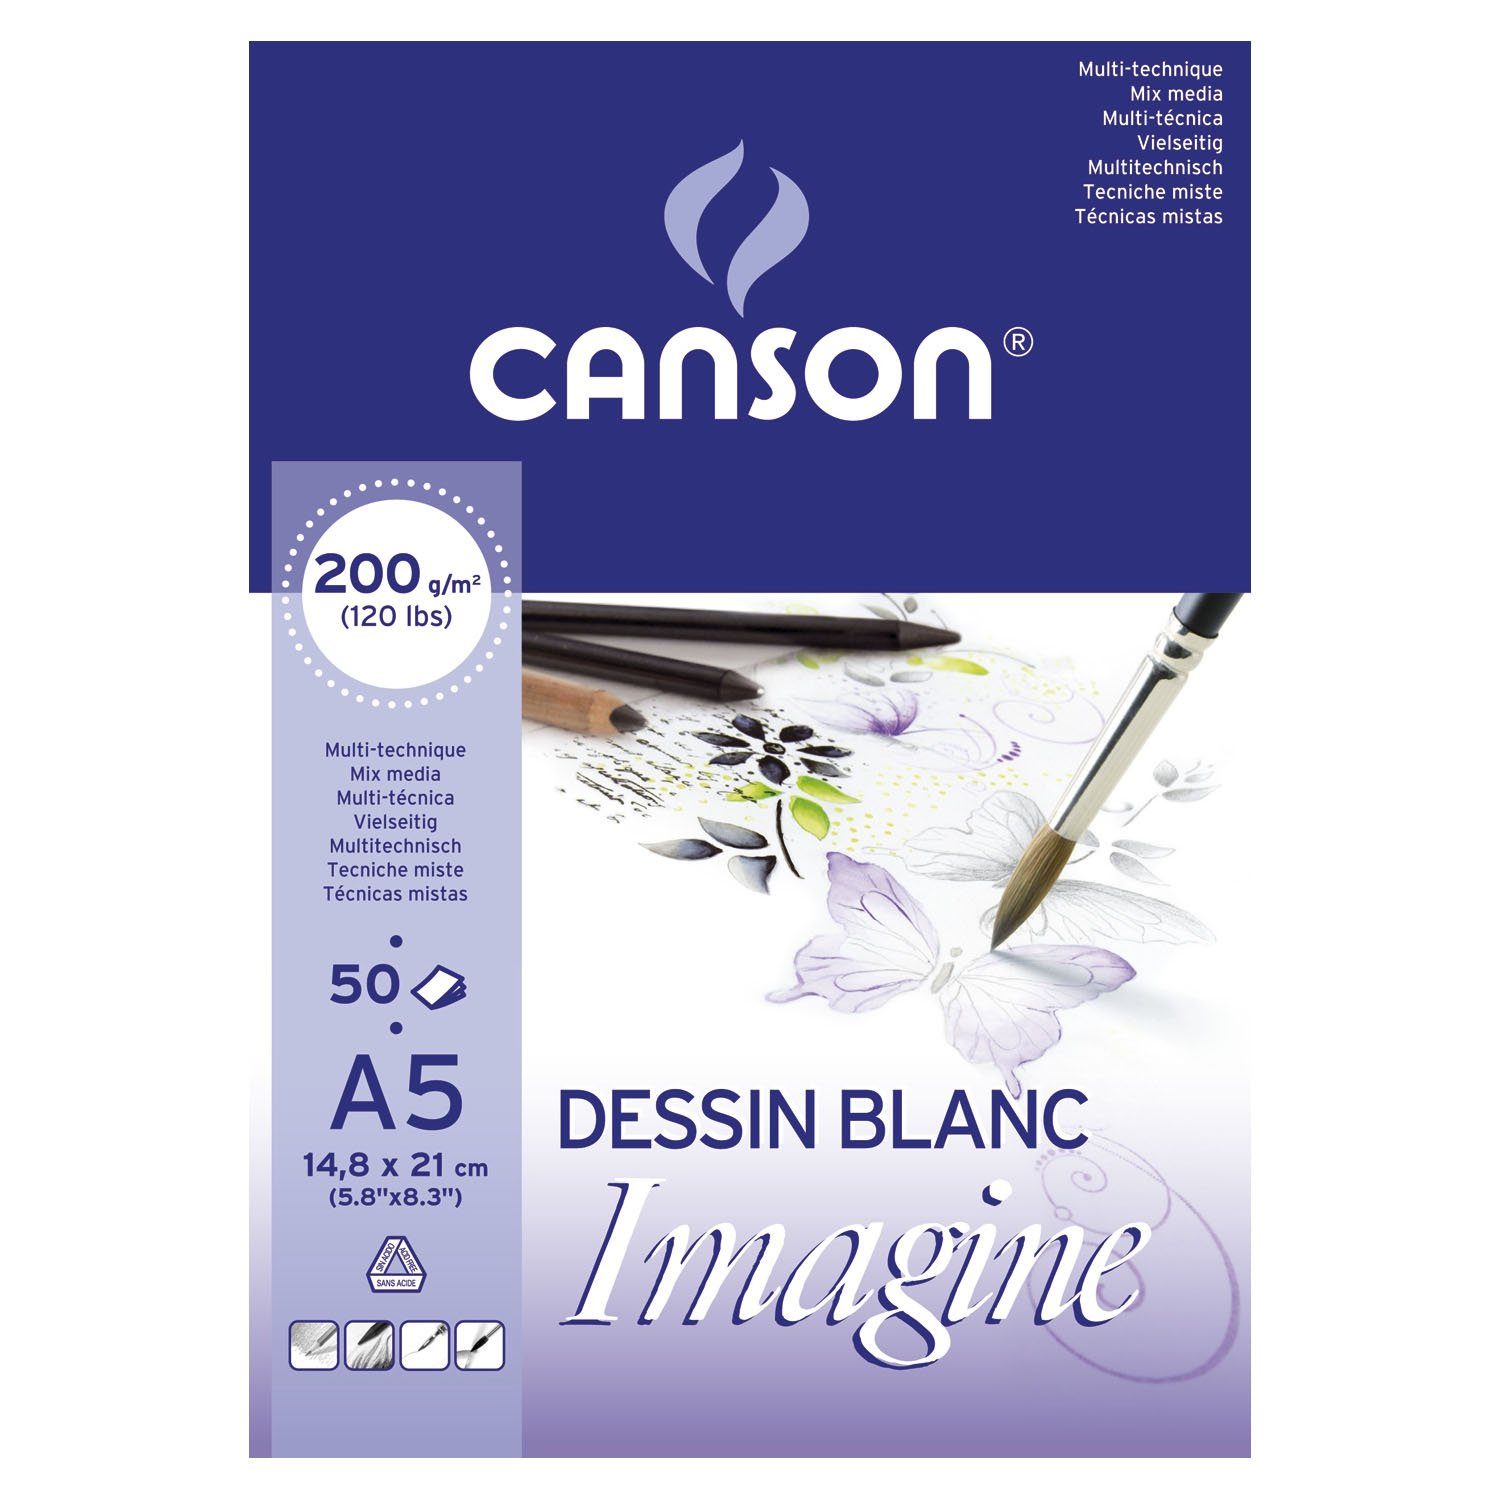 Notizbuch CANSON 200 g/qm Imagine, DIN A5, Skizzenblock canson